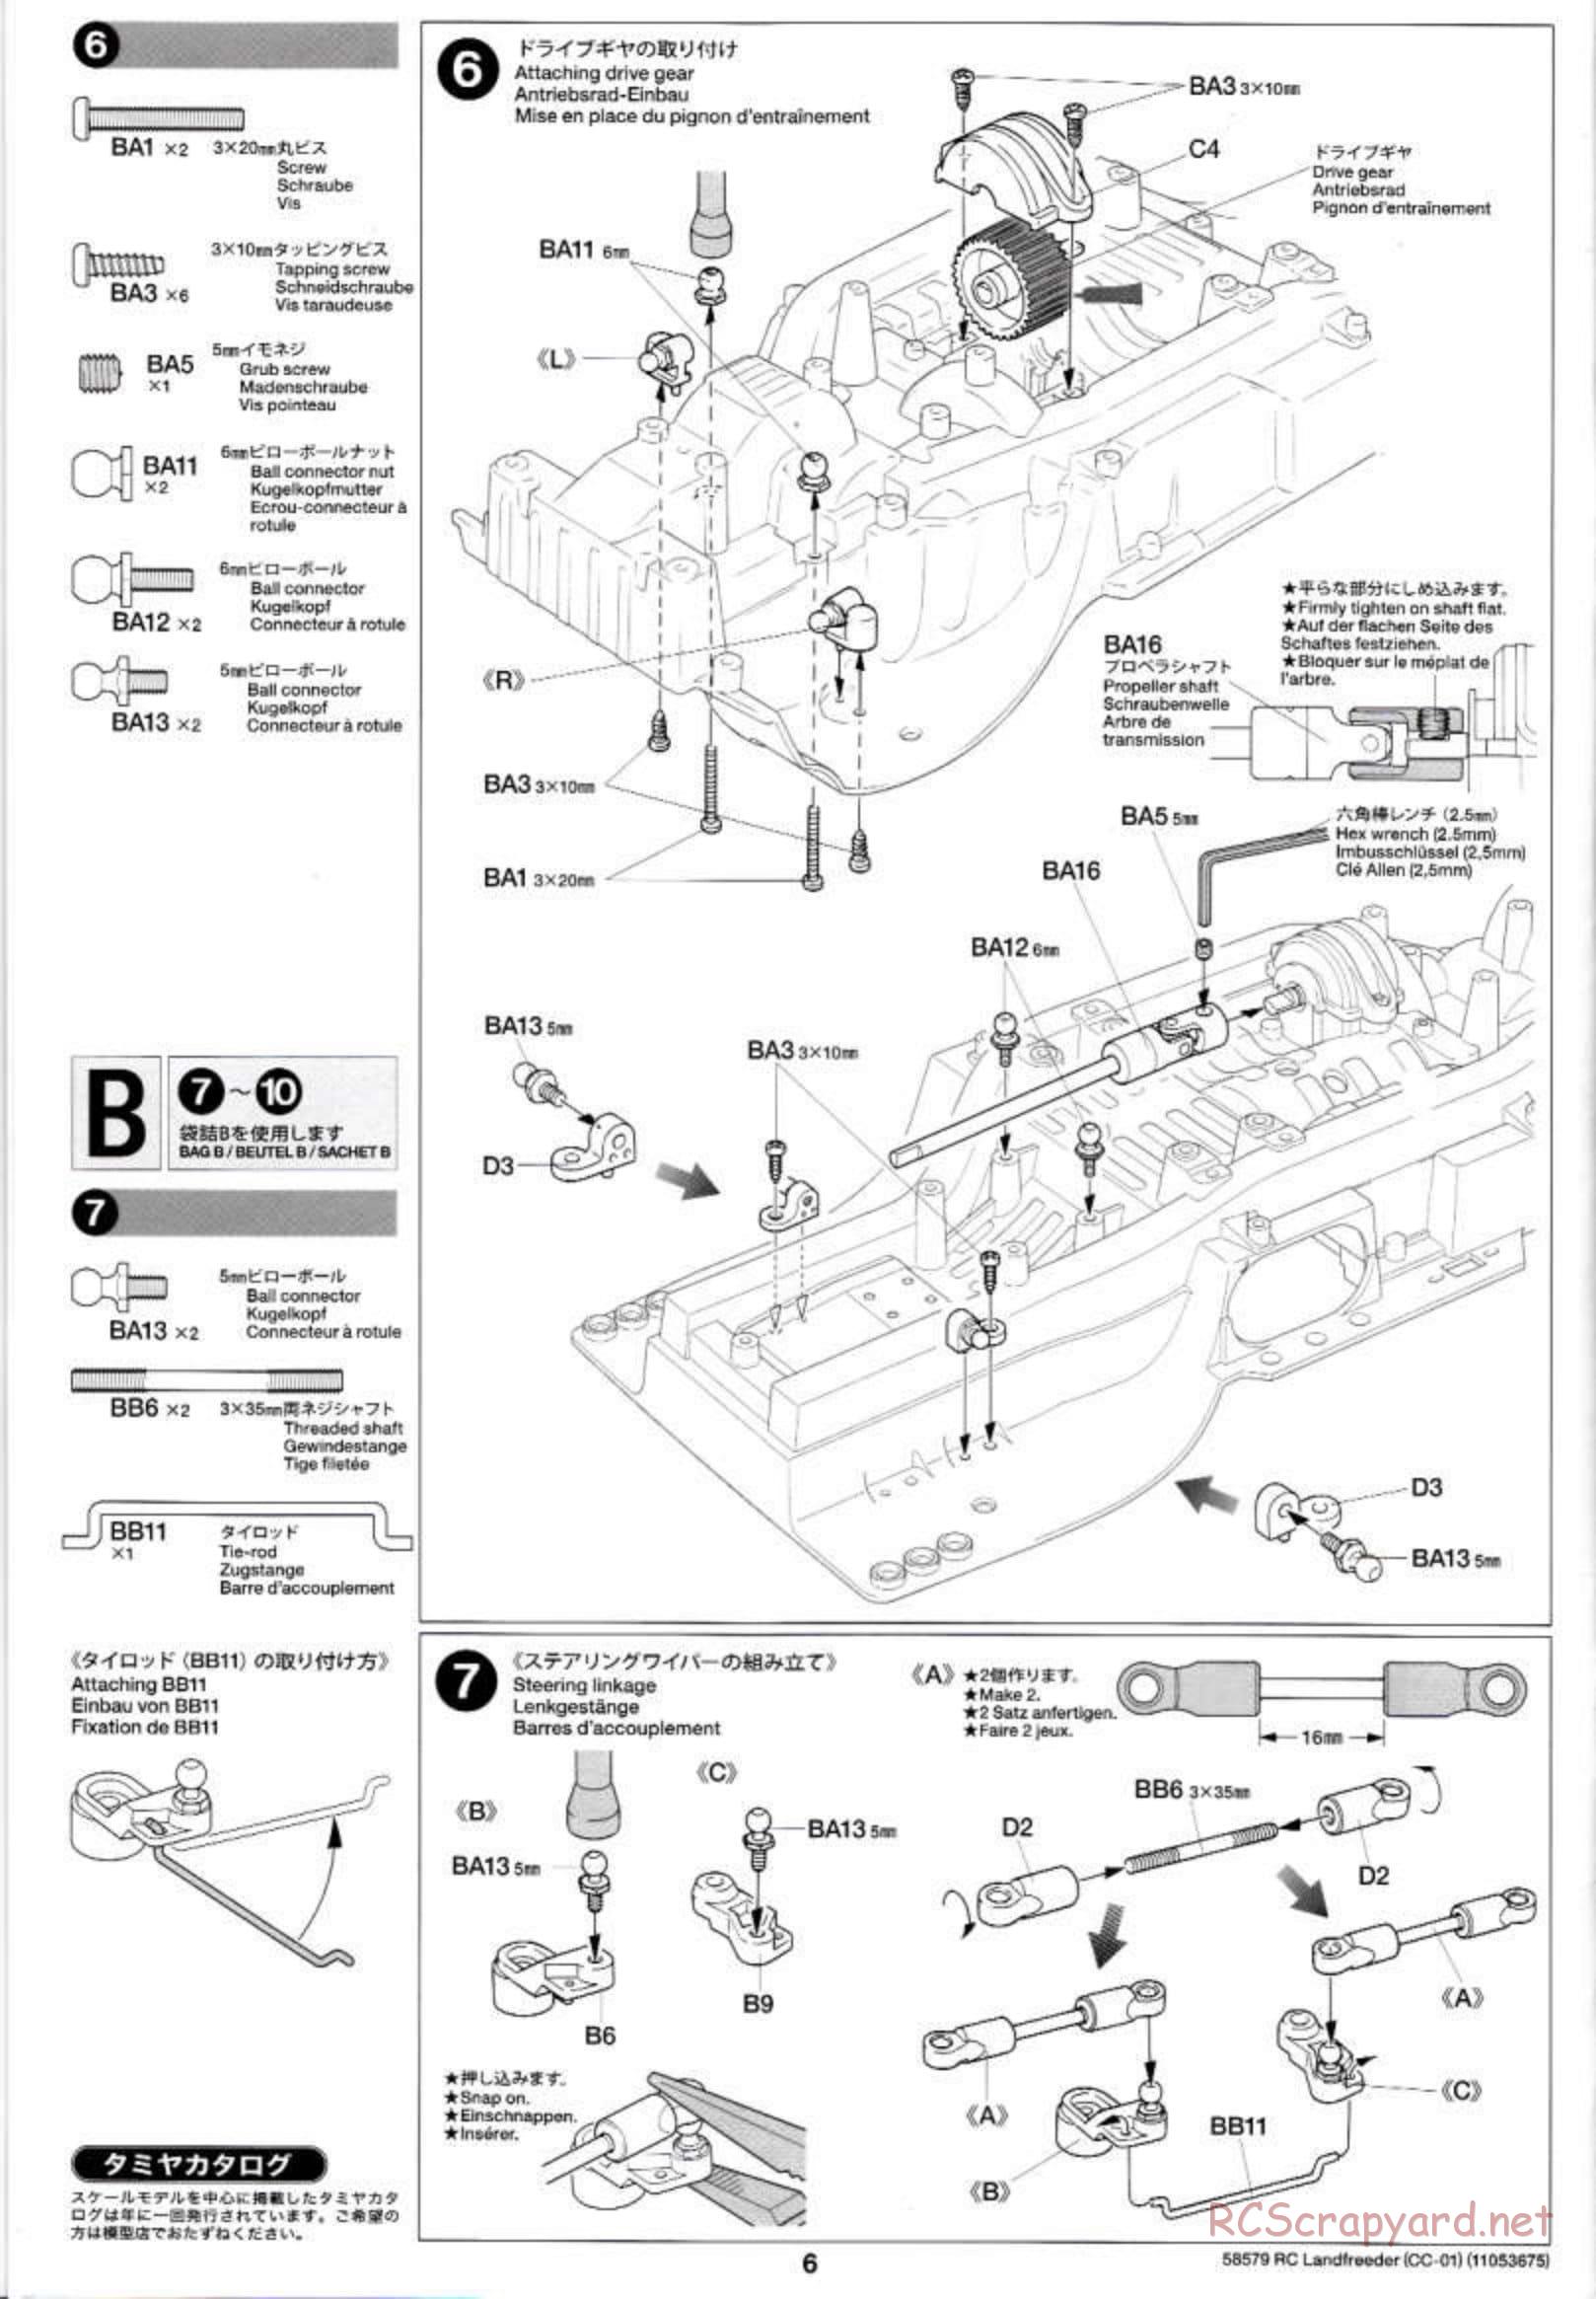 Tamiya - LandFreeder - CC-01 Chassis - Manual - Page 6